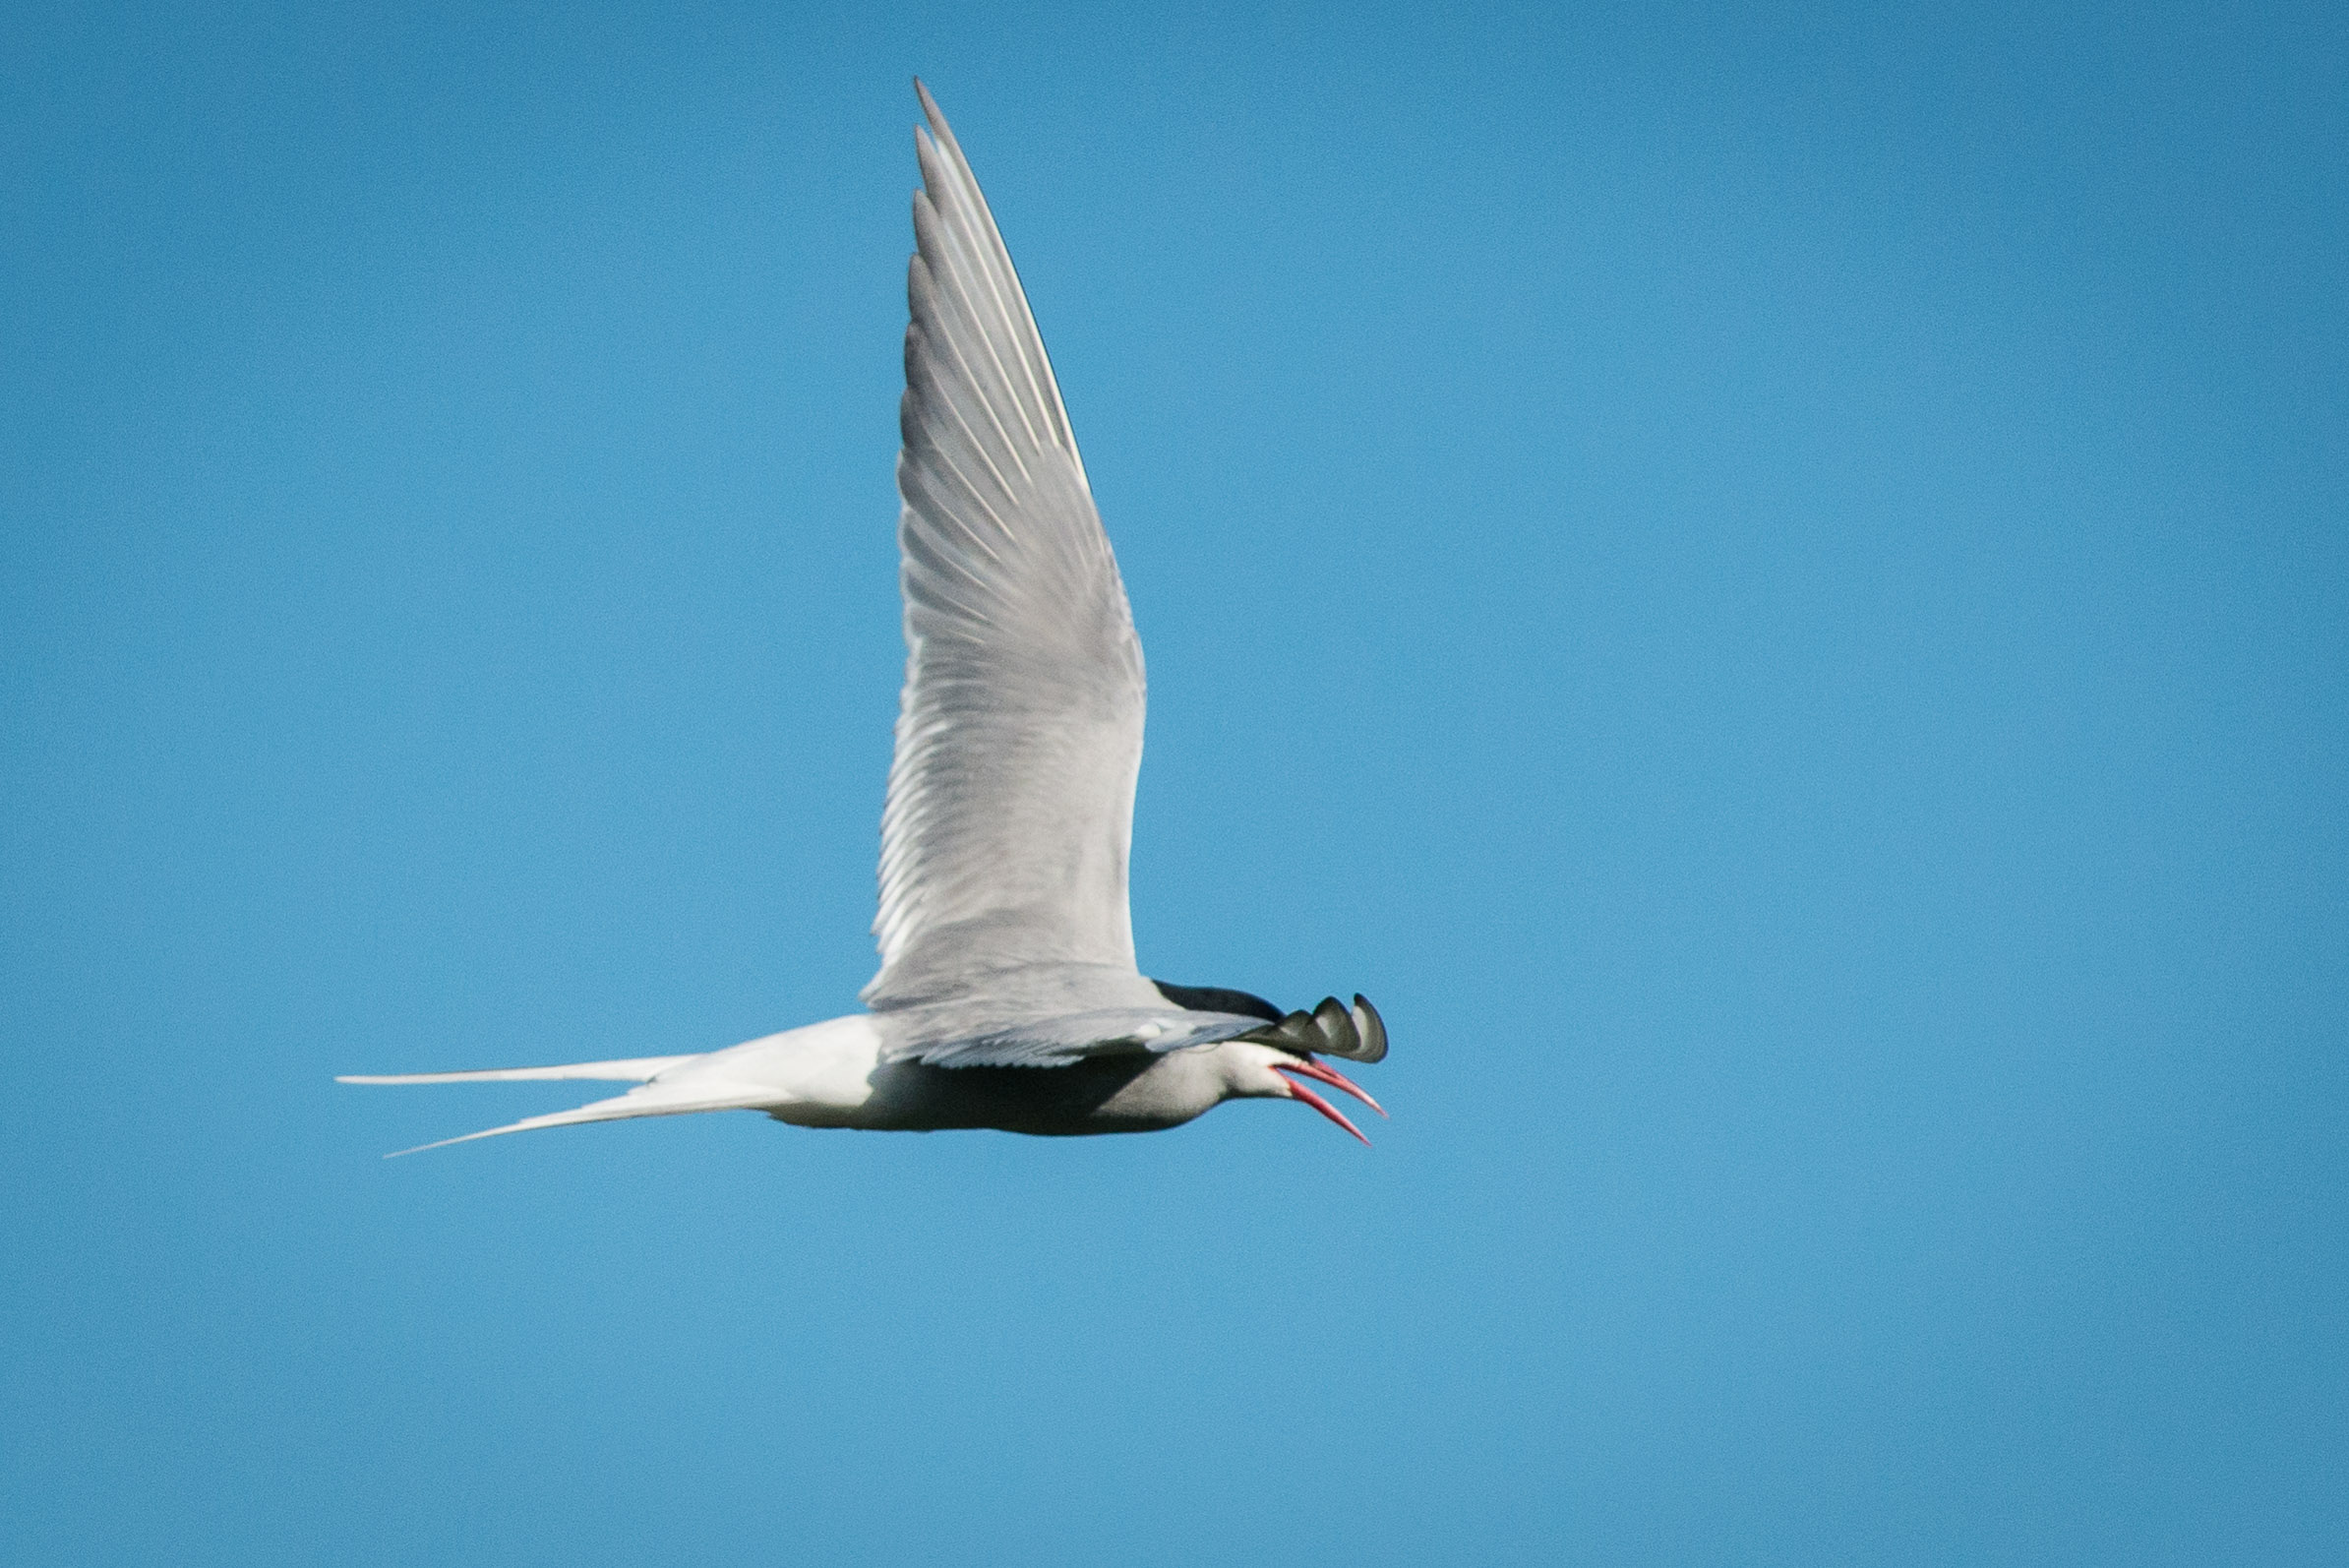 #bird, #tern, #arctictern, #iceland, #windstar, #vigurisland, #nikond800, #flight, #nature, #wildlife